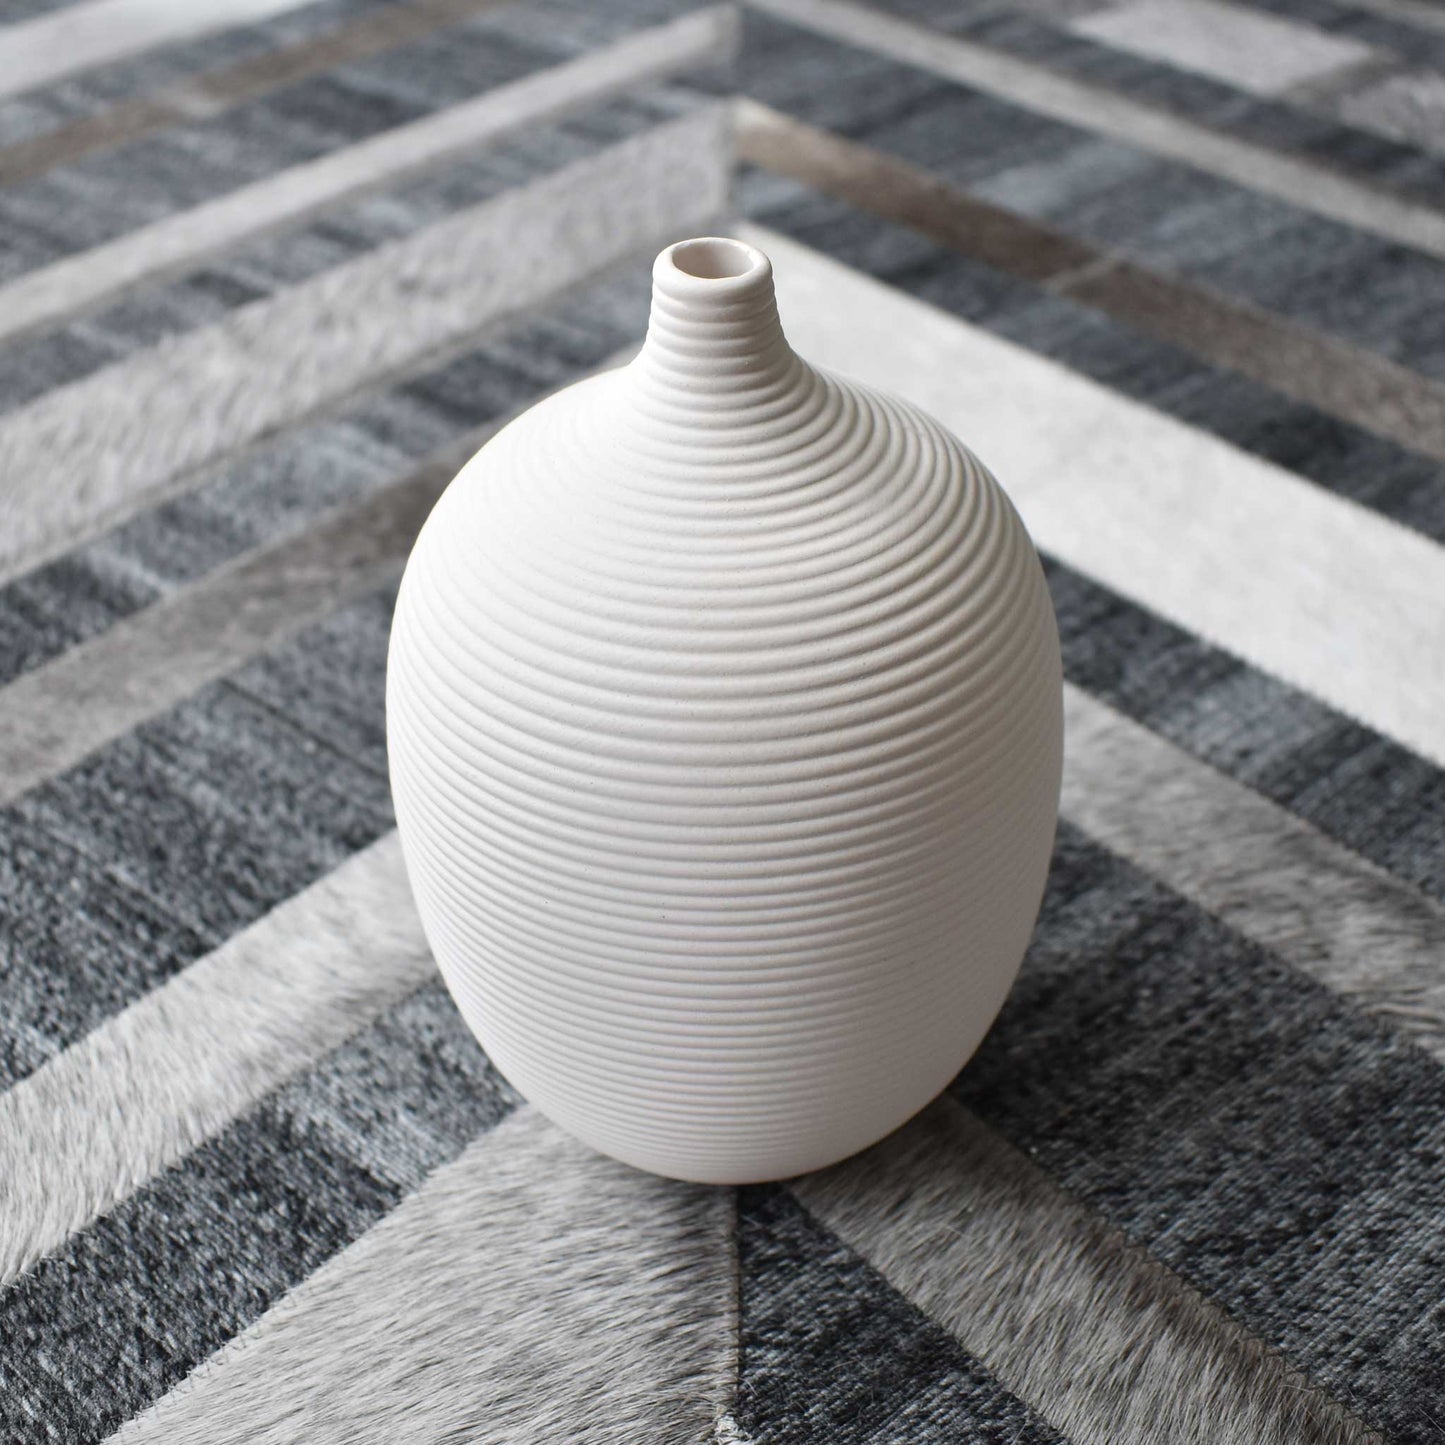 White ceramic ribbed decorative vase on chevron cowhide rug.